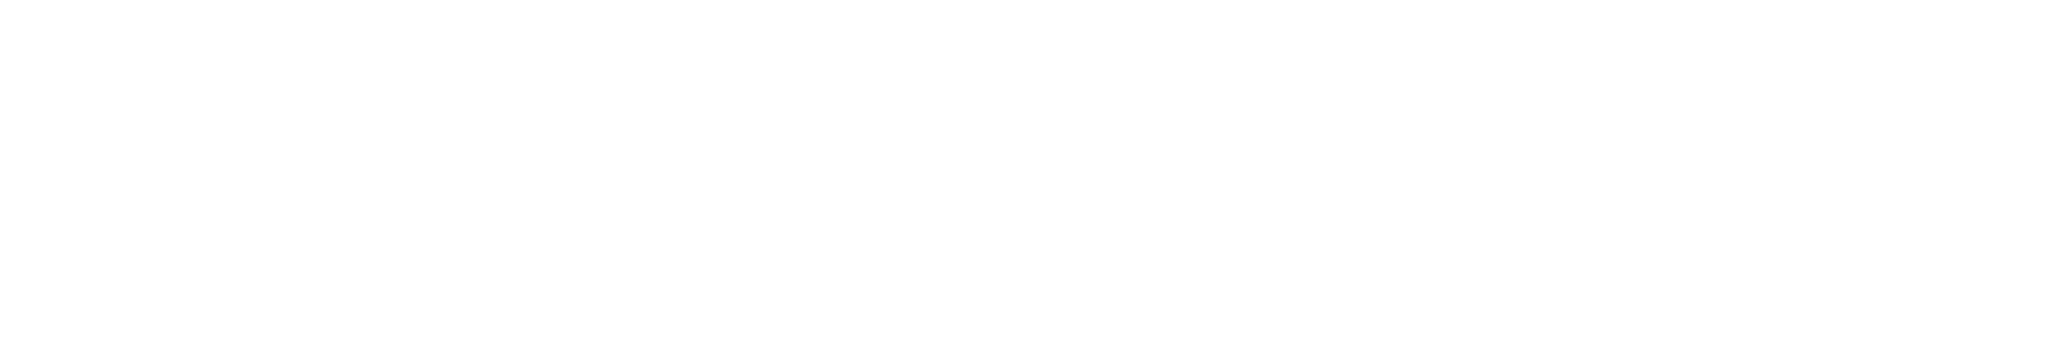 Kyber logo on a black background.